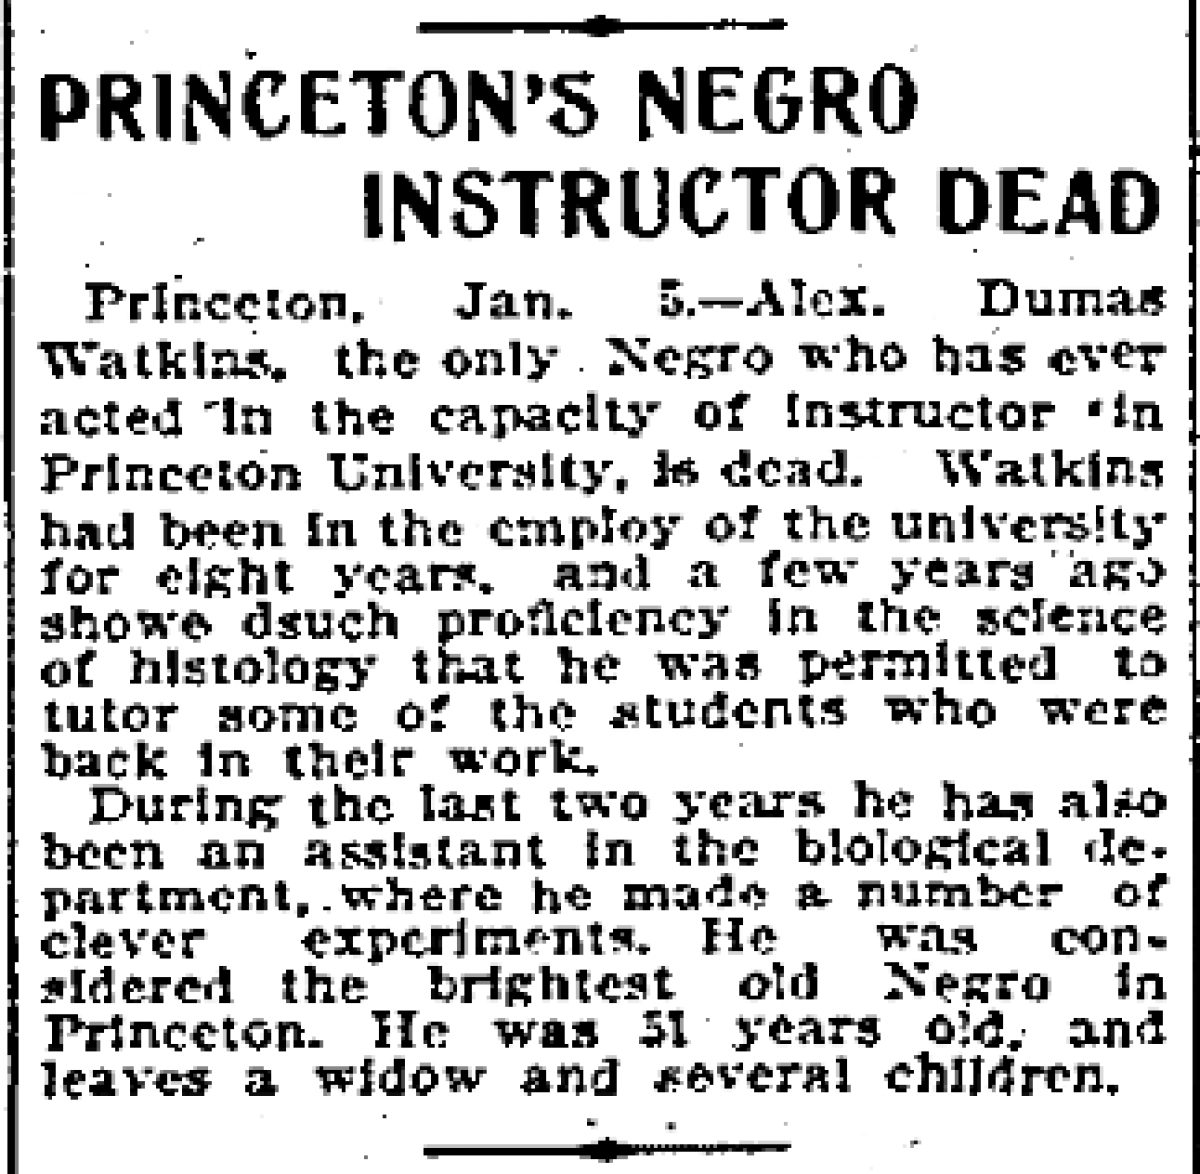 "Princeton's Negro Instructor Dead"